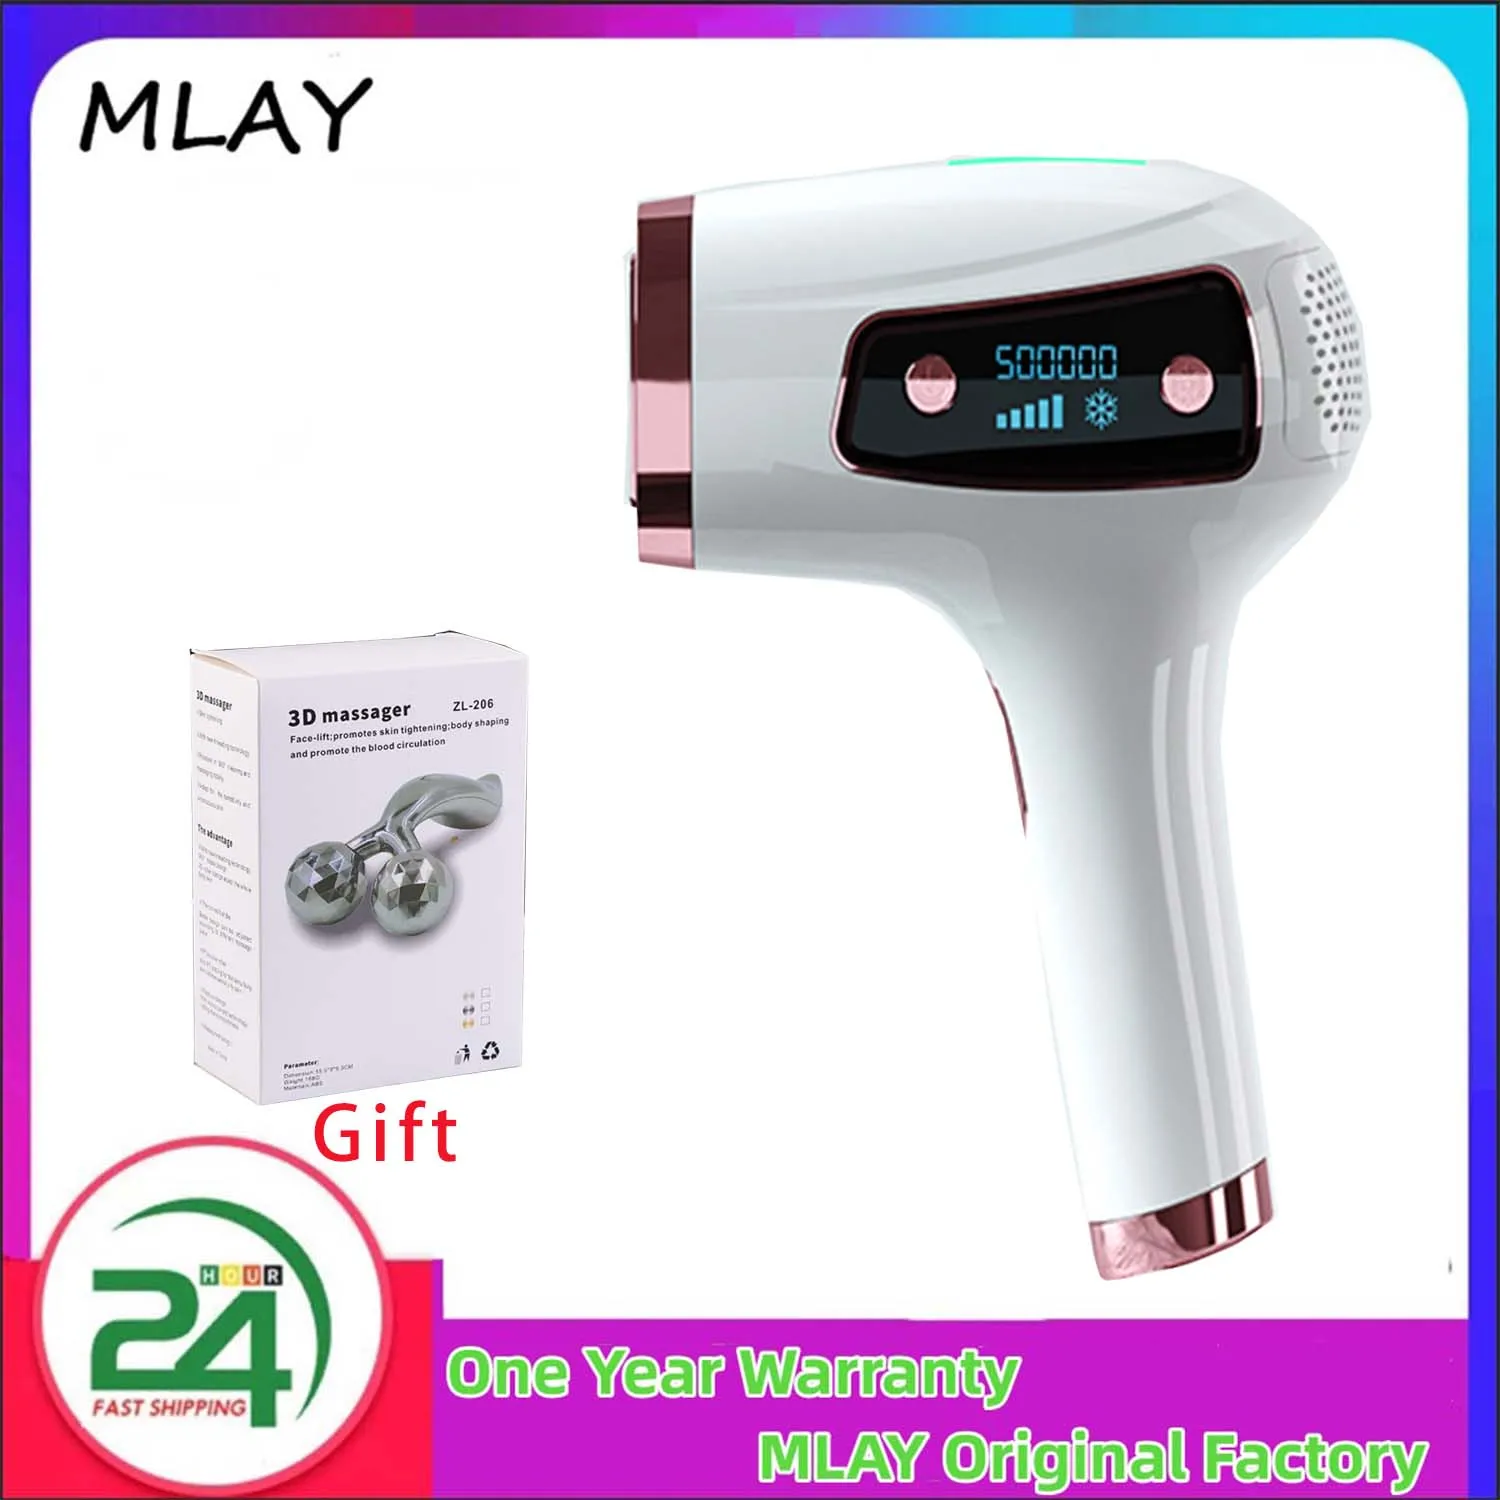 MLAY T8 Laser Hair Removal ICE Cold Device IPL Laser Epilator Bikini Portable Body Facial Hair Remover Machine For Women Men